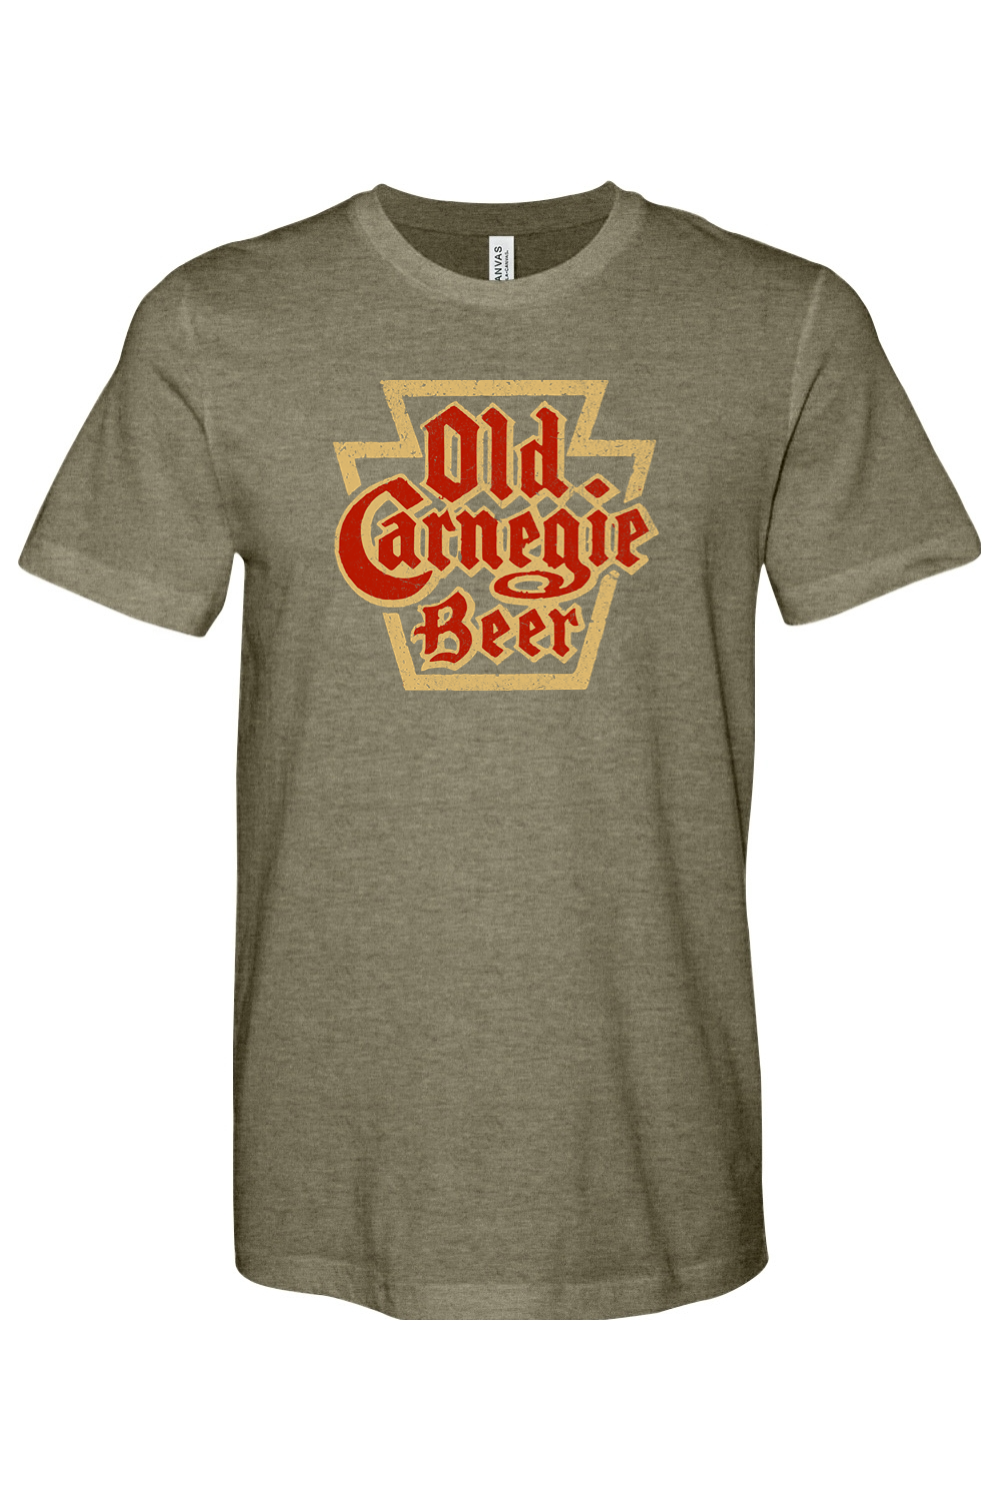 Old Carnegie Beer - Yinzylvania